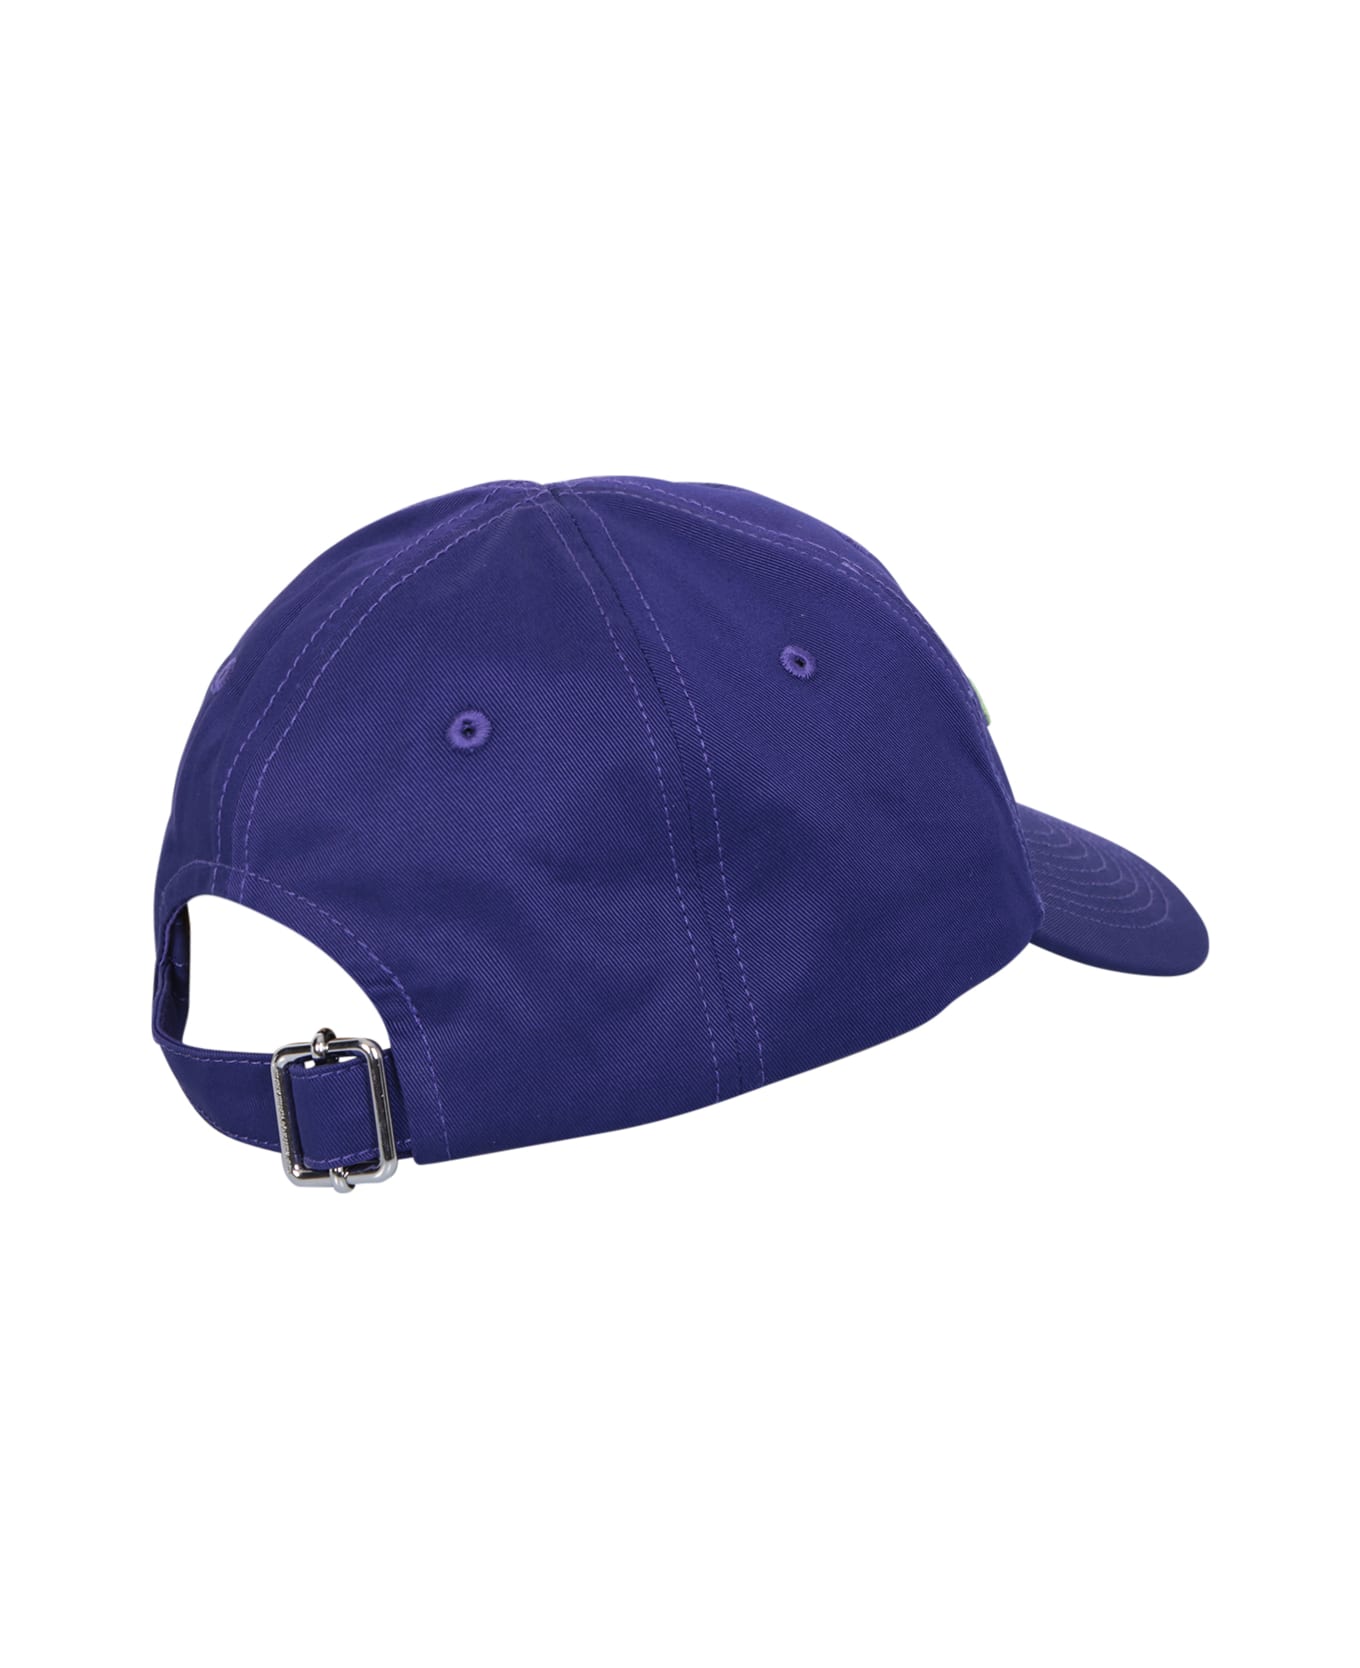 Off-White Baseball Cap - PURPLE 帽子